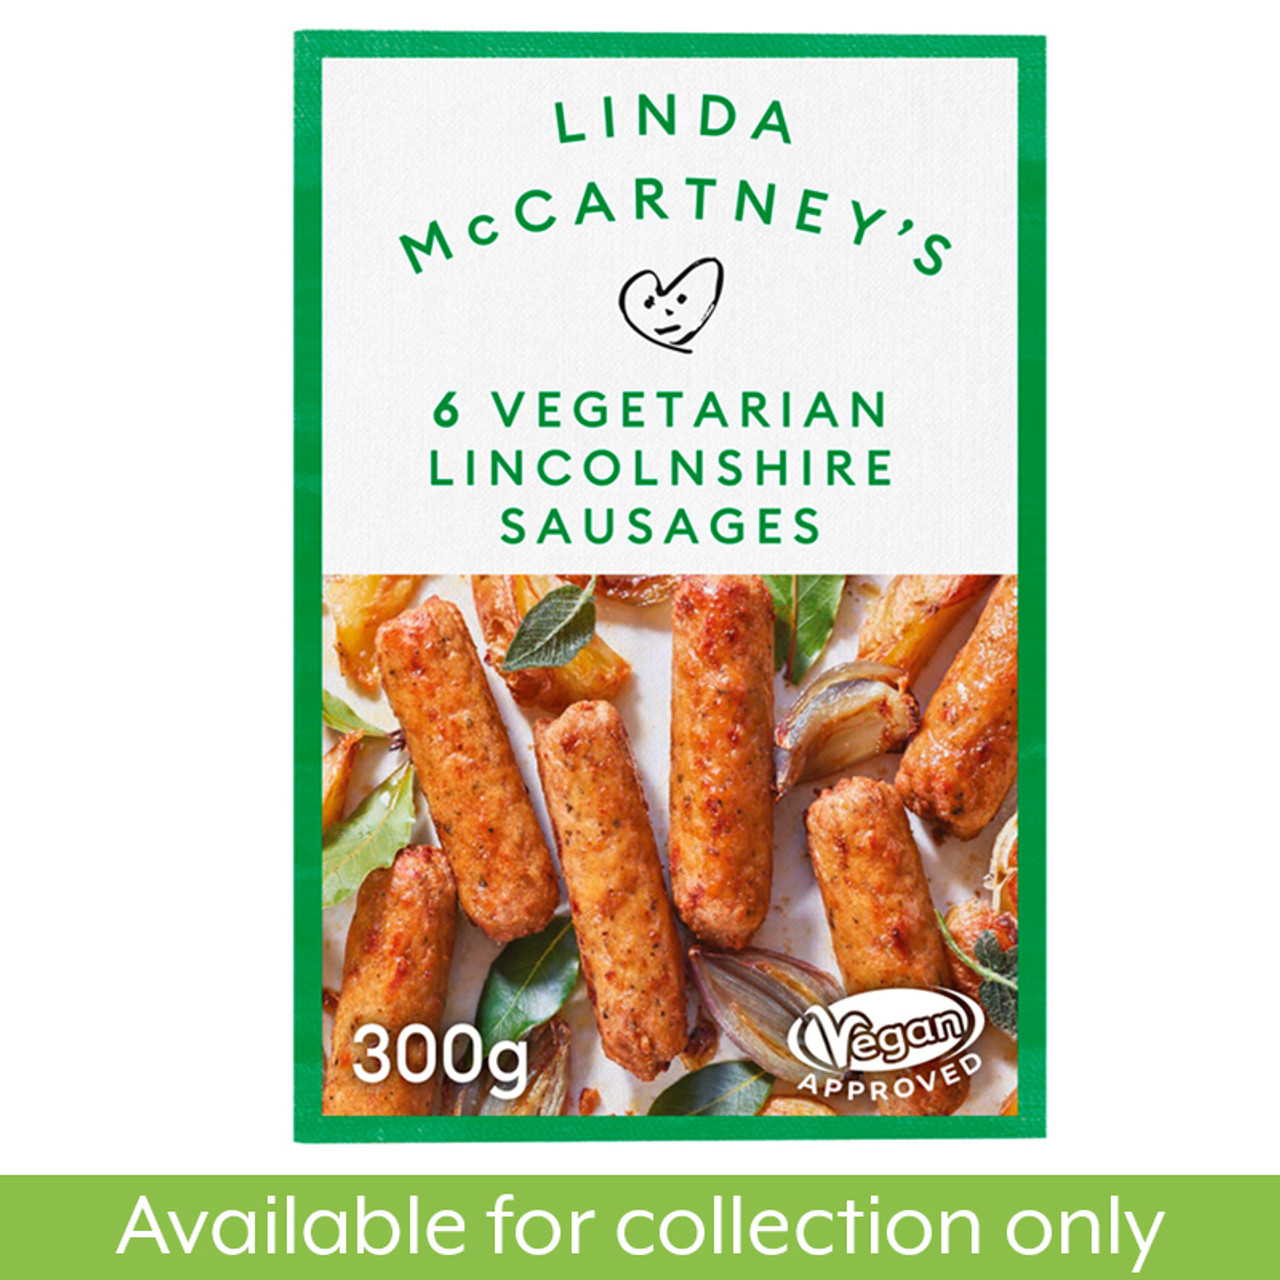 LINDA McCARTNEY - LINCOLNSHIRE SAUSAGES - 300g 